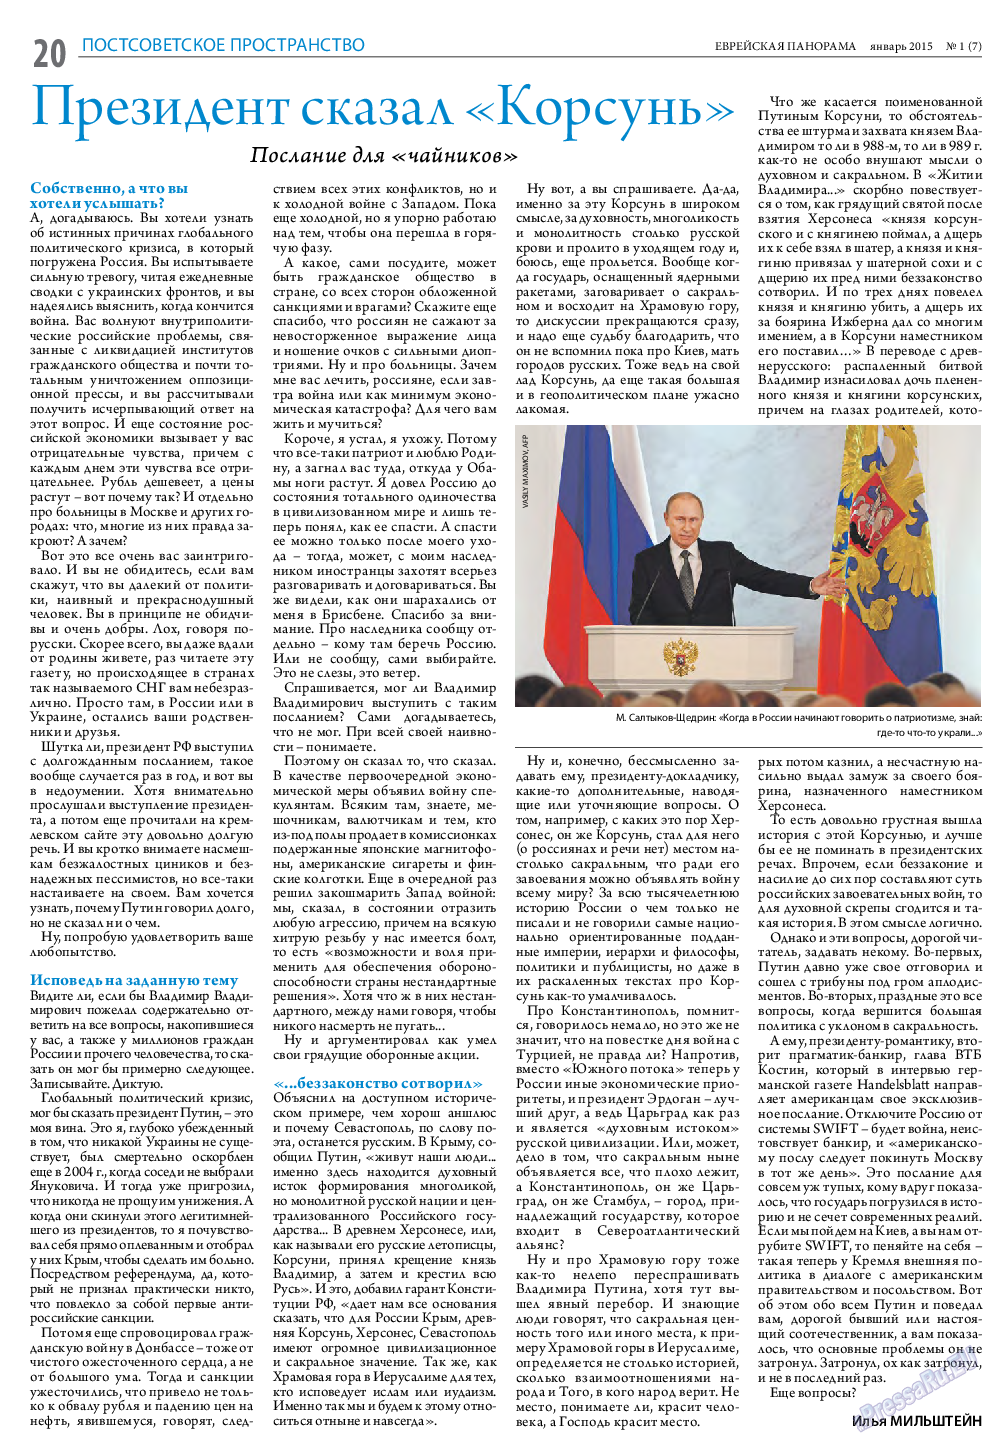 Еврейская панорама, газета. 2015 №1 стр.20